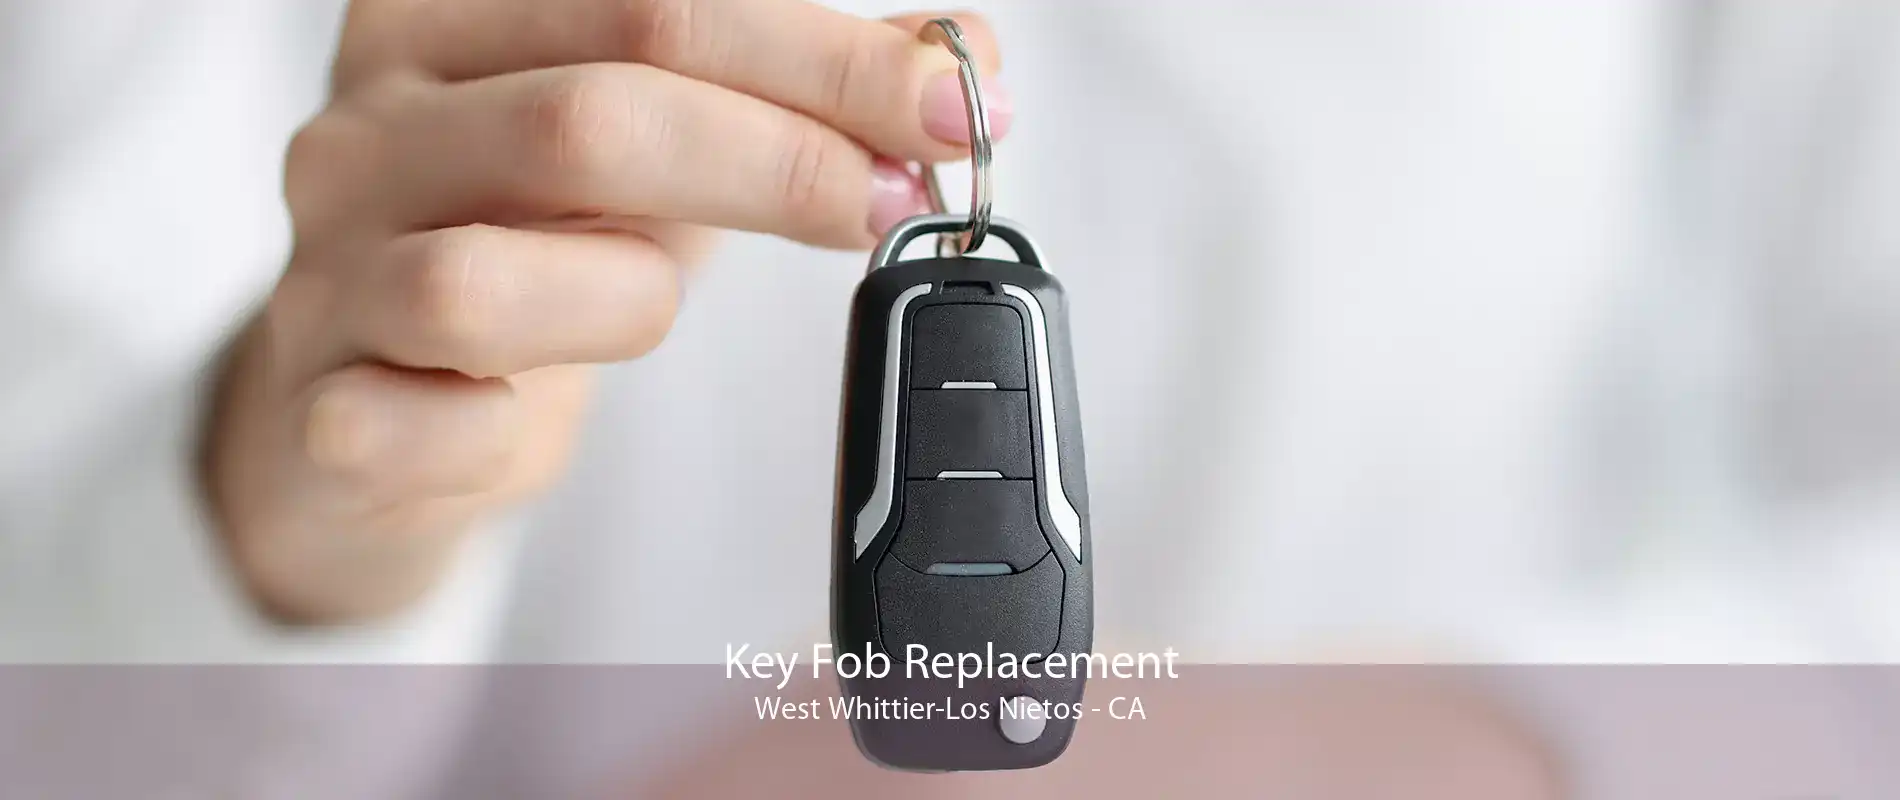 Key Fob Replacement West Whittier-Los Nietos - CA